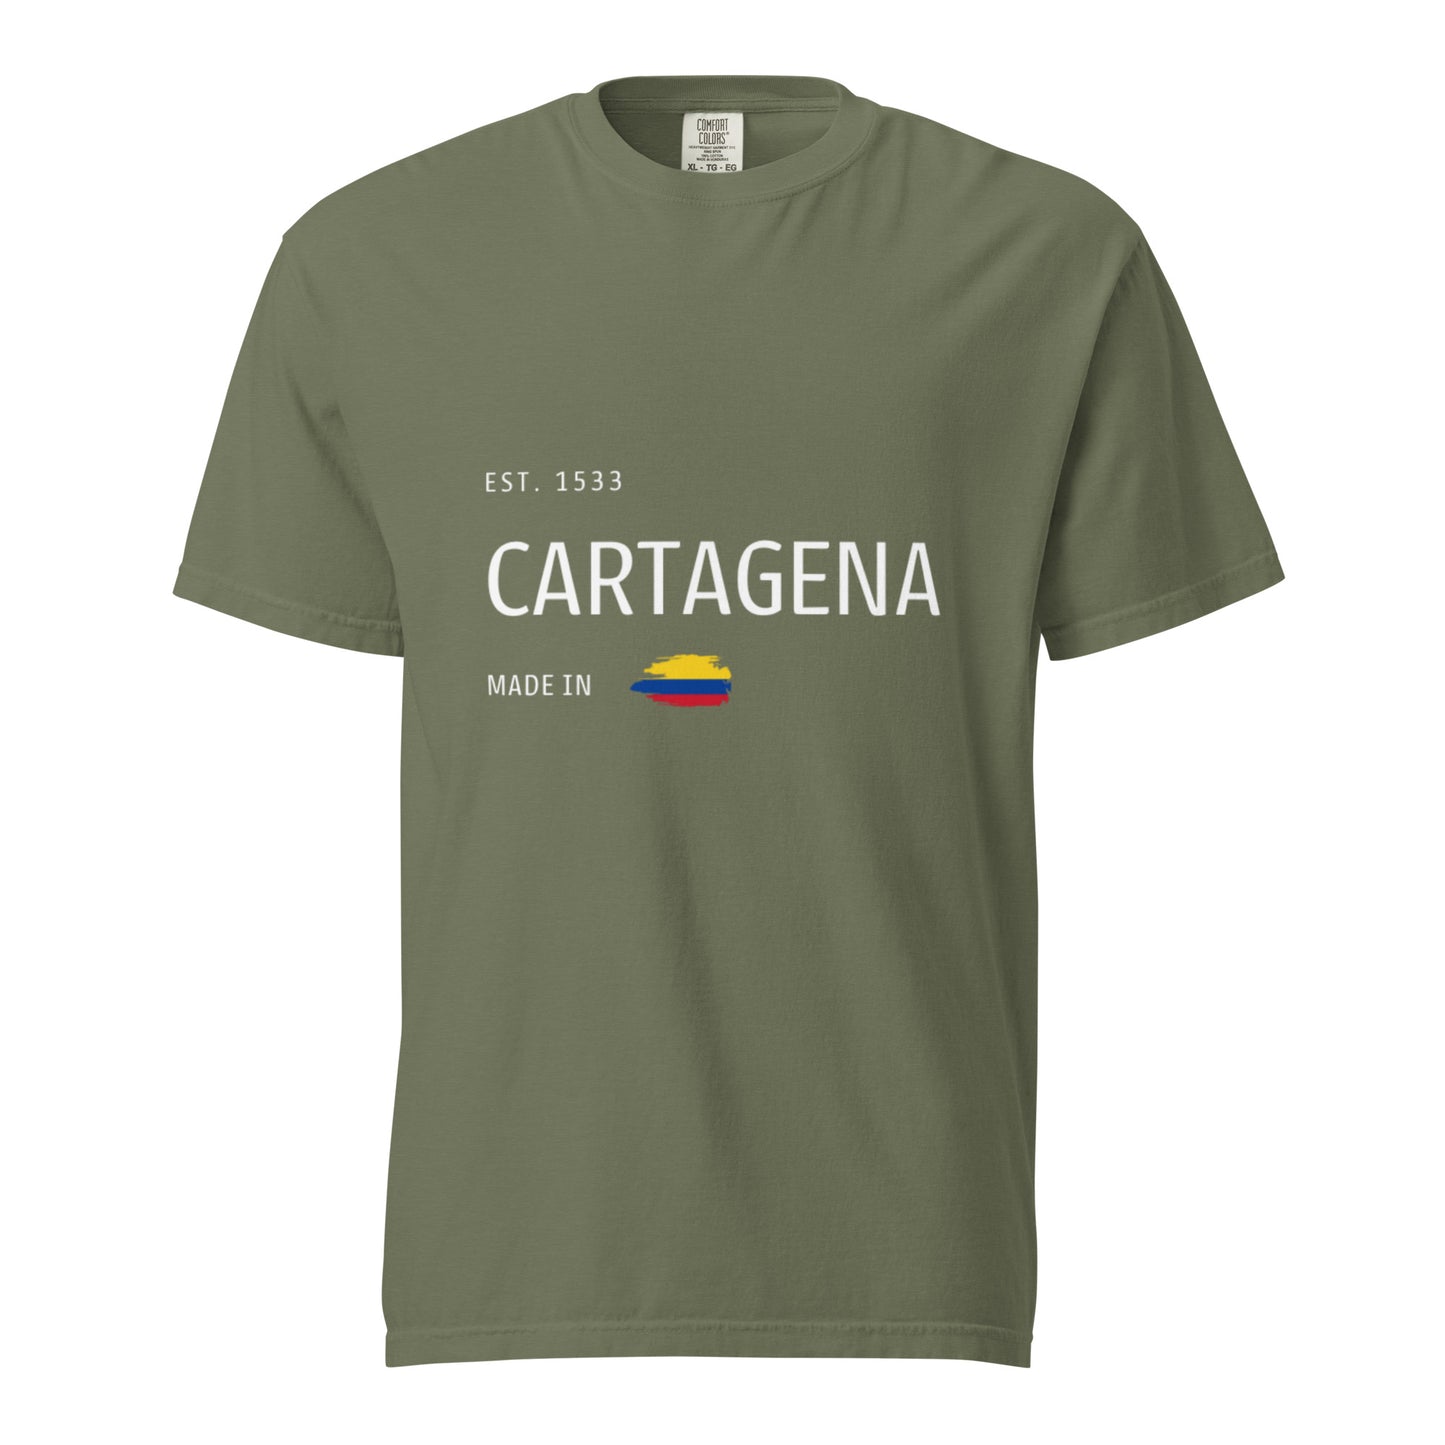 Made in Cartagena Shirt